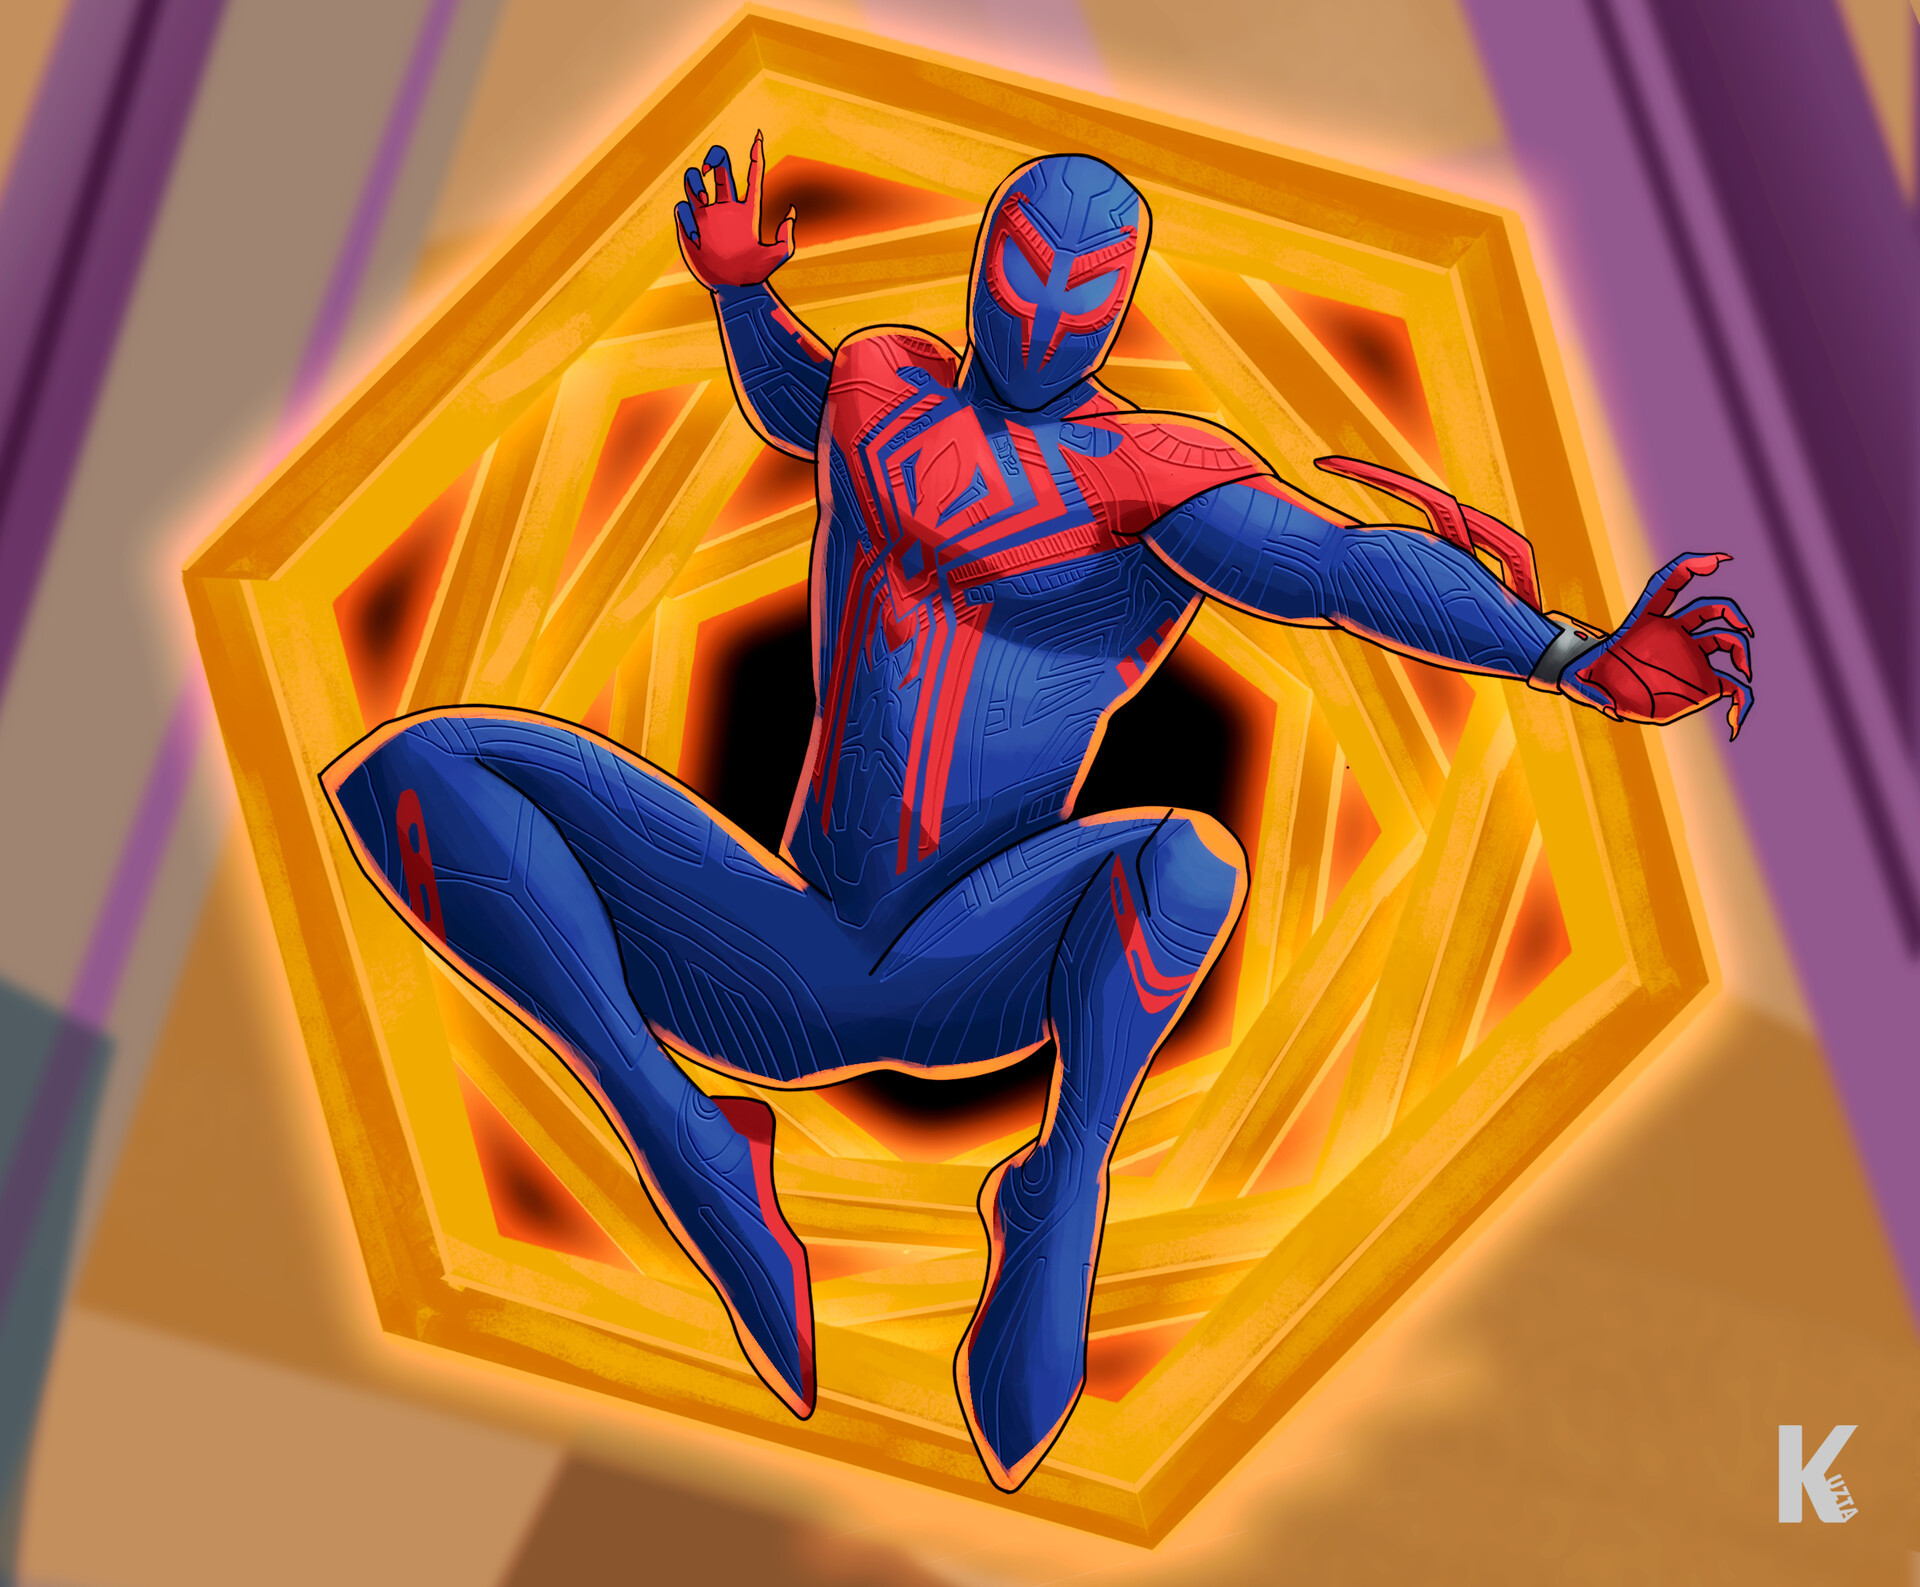 ArtStation - Spiderman 2099 - Fan art, Eduardo Yañez